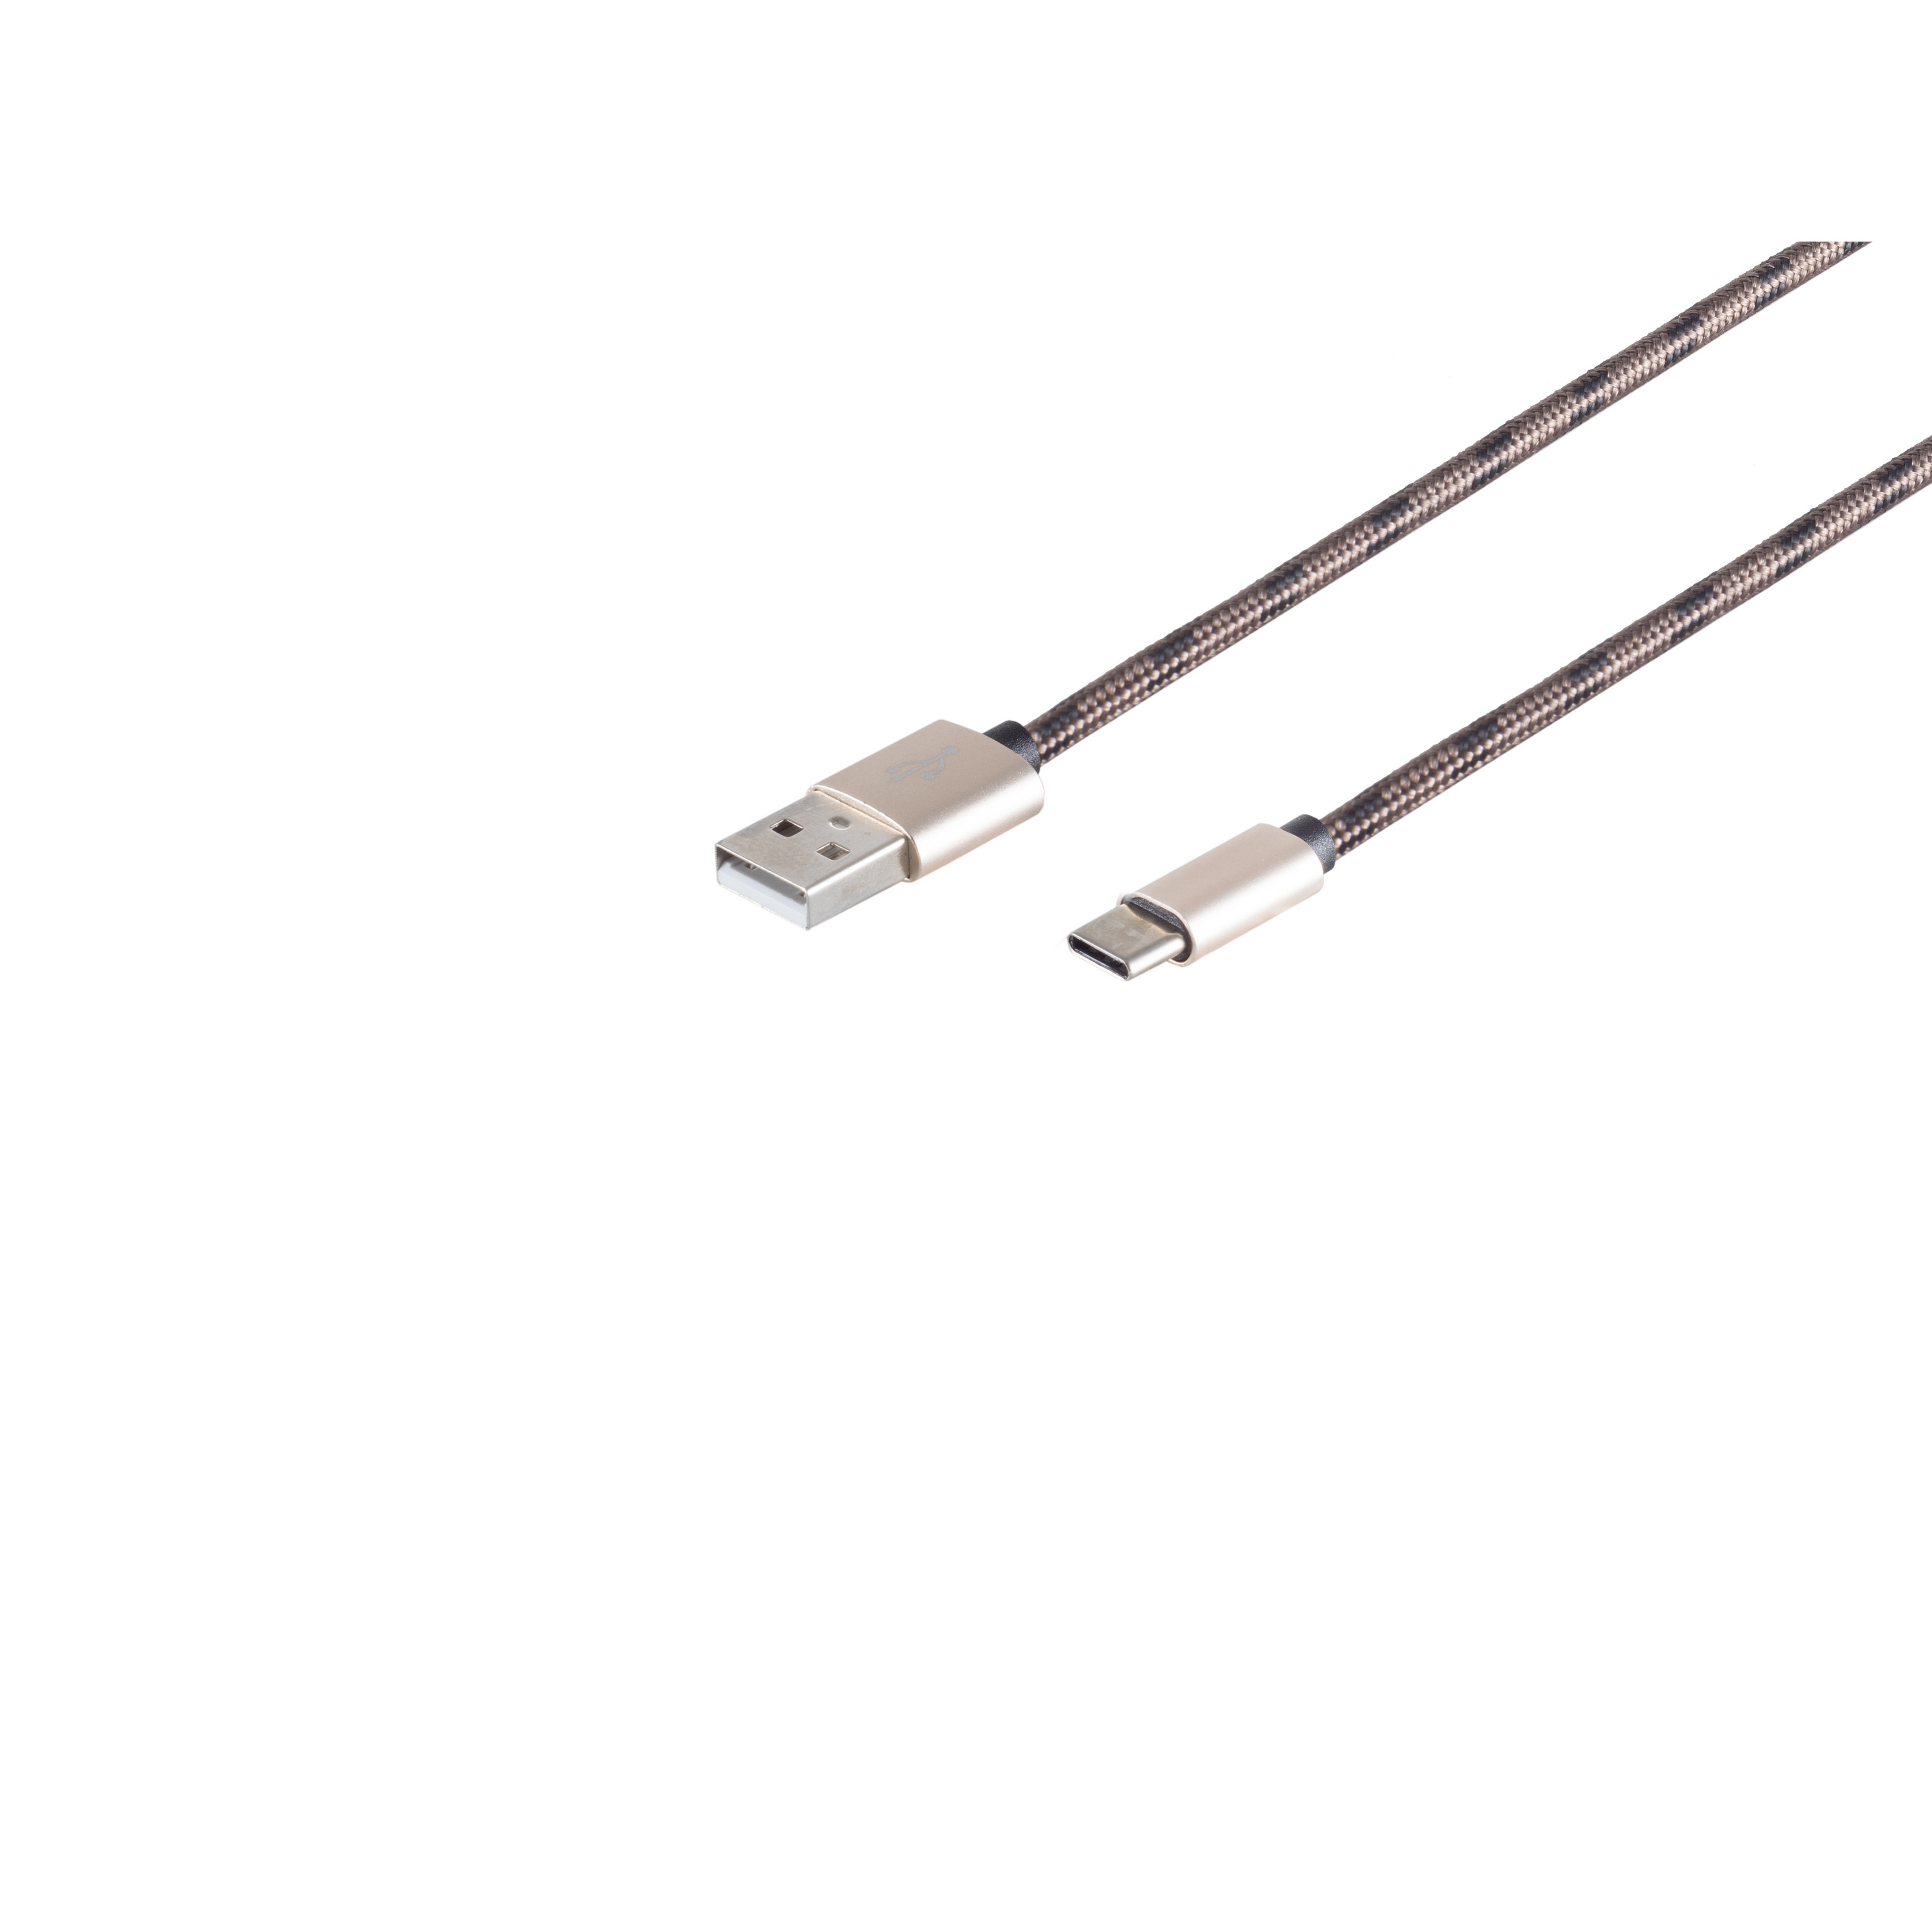 C S/CONN Kabel CONNECTIVITY USB auf A USB-Ladekabel USB Stecker Typ braun 2m MAXIMUM